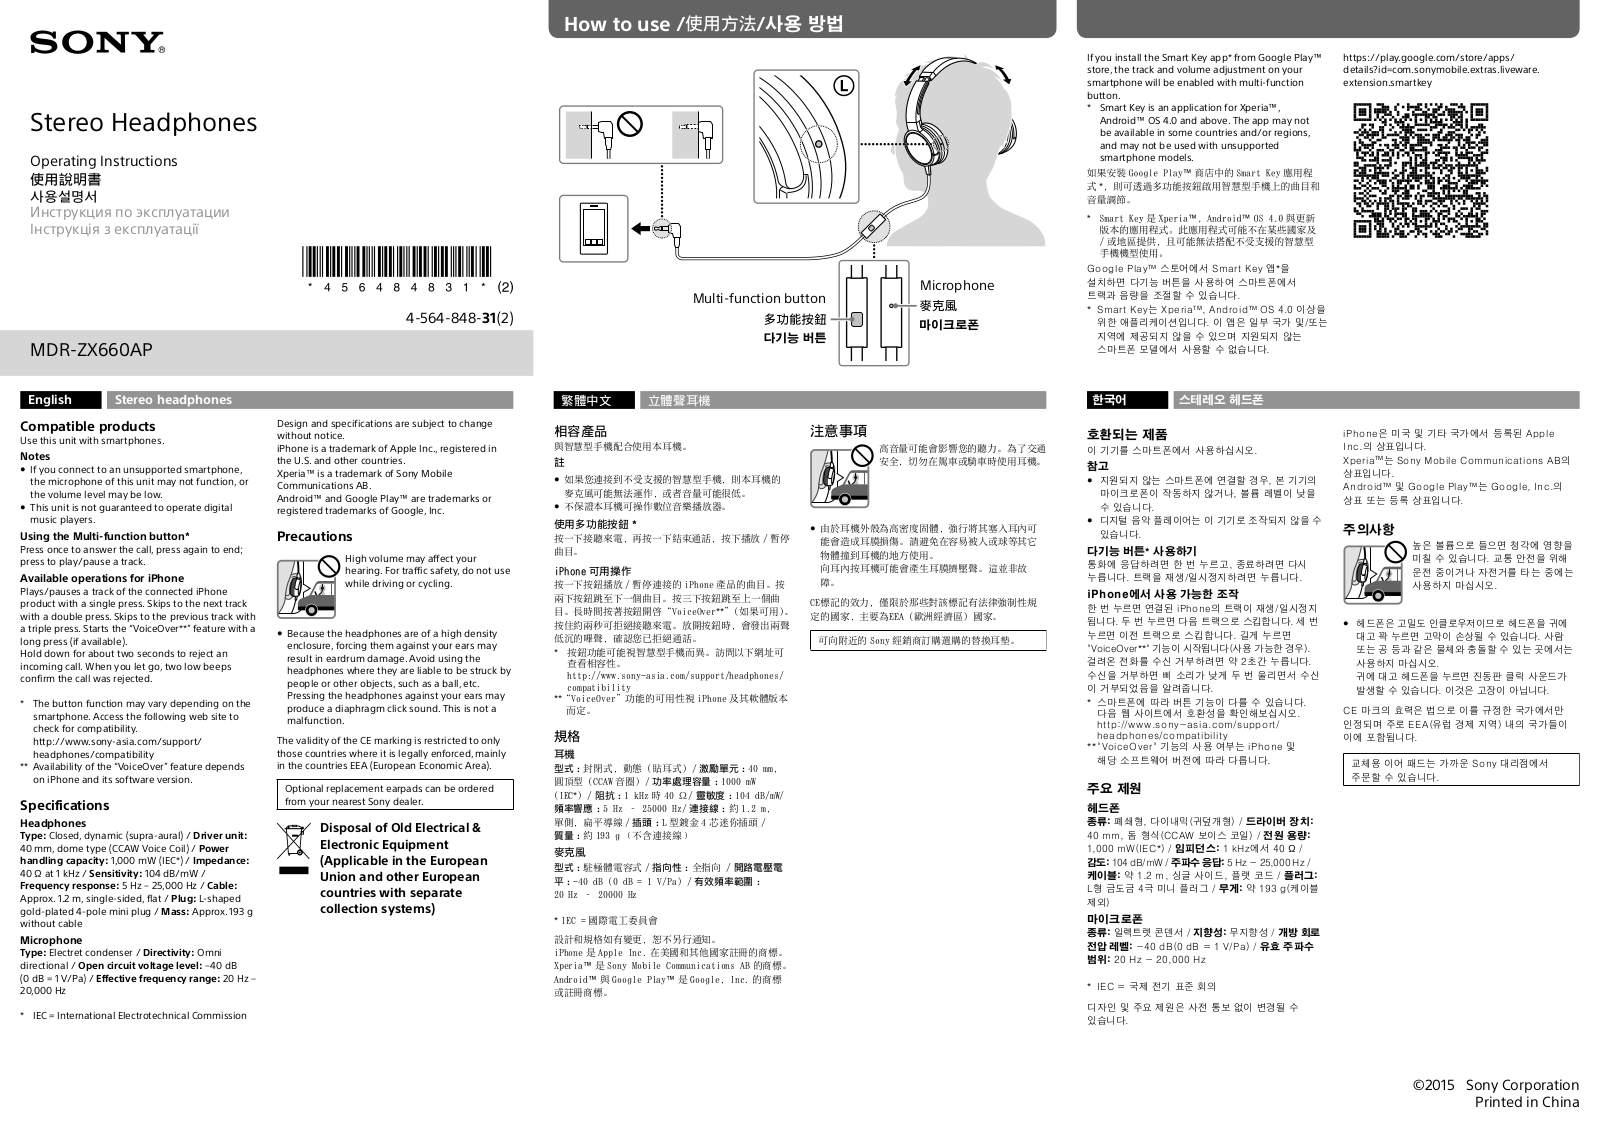 Sony MDRZX660APBCЕ User Manual